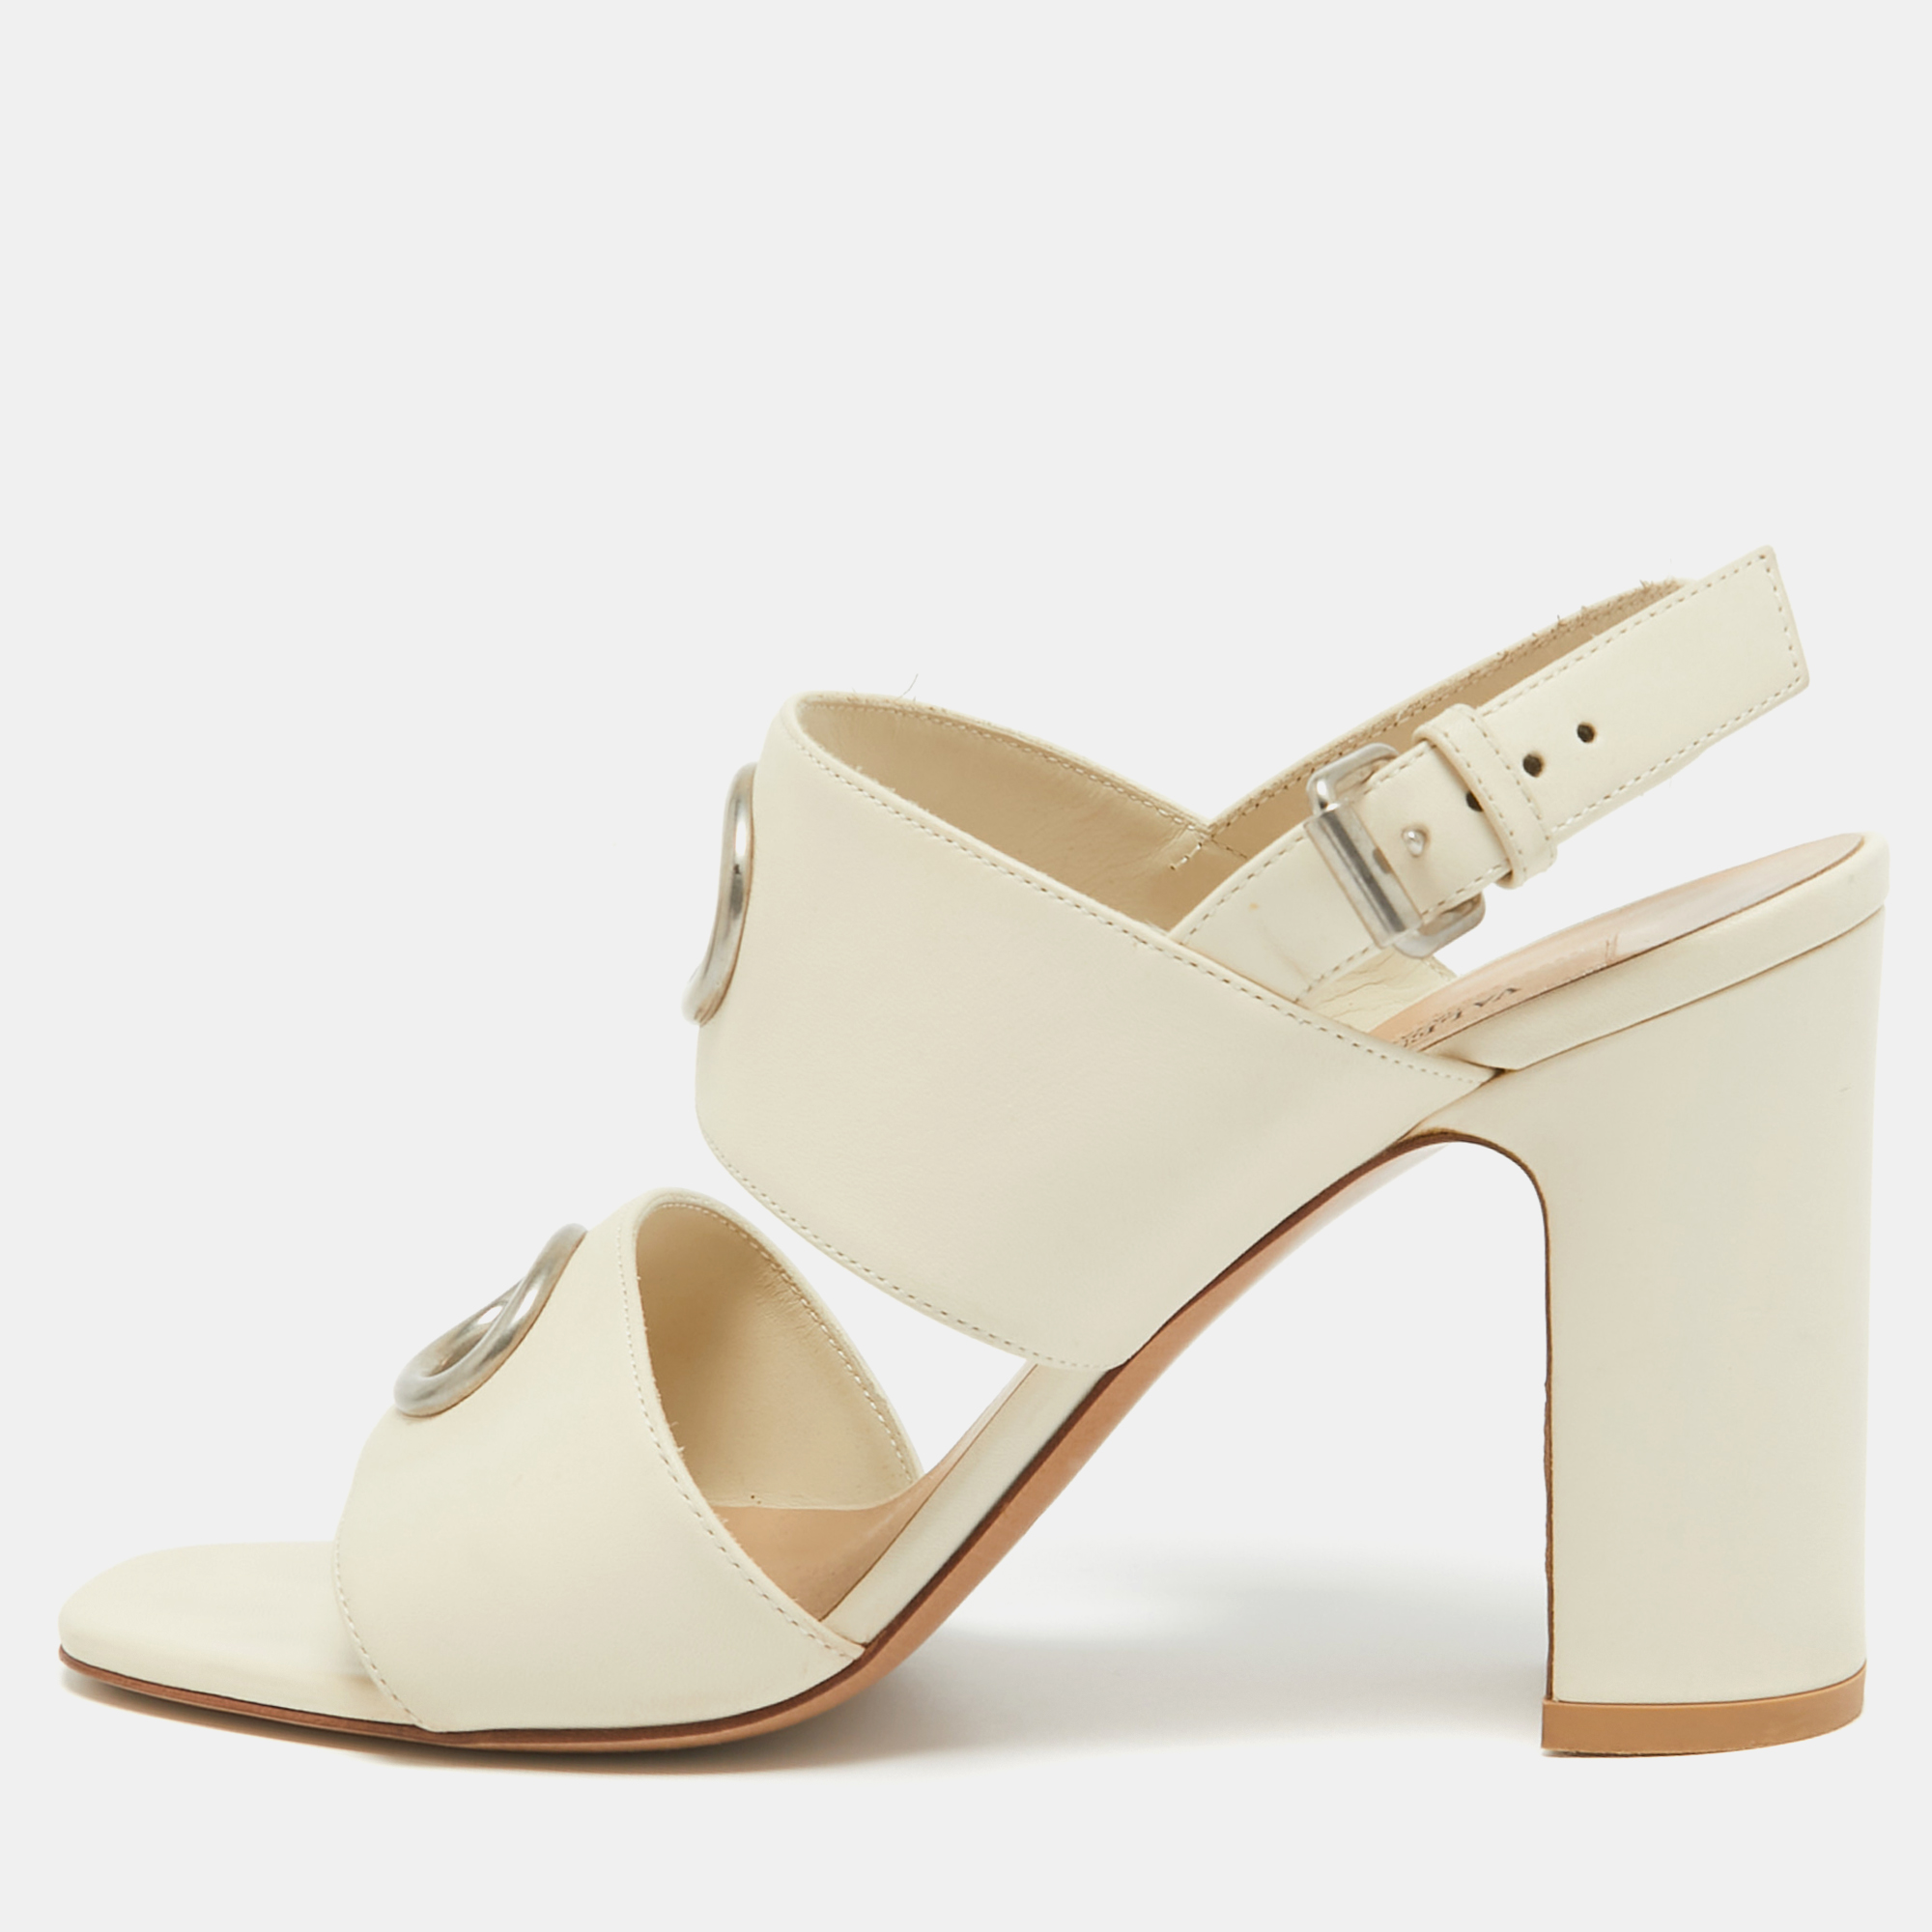 Valentino cream leather slingback sandals size 37